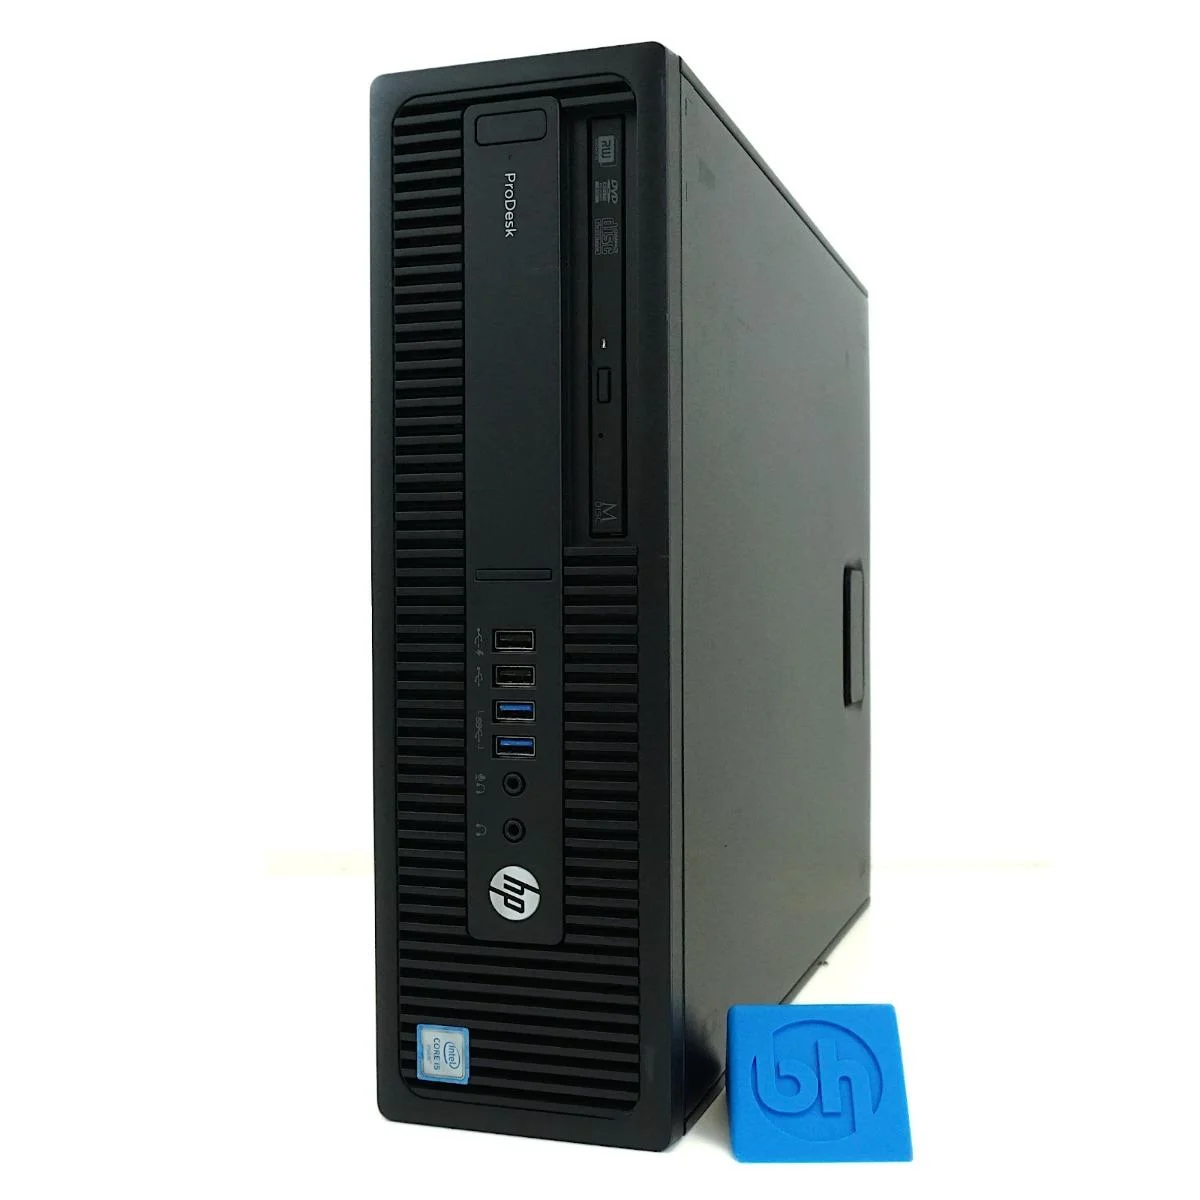 HP ProDesk 600 G2 SFF Pre-Configured Desktop PC